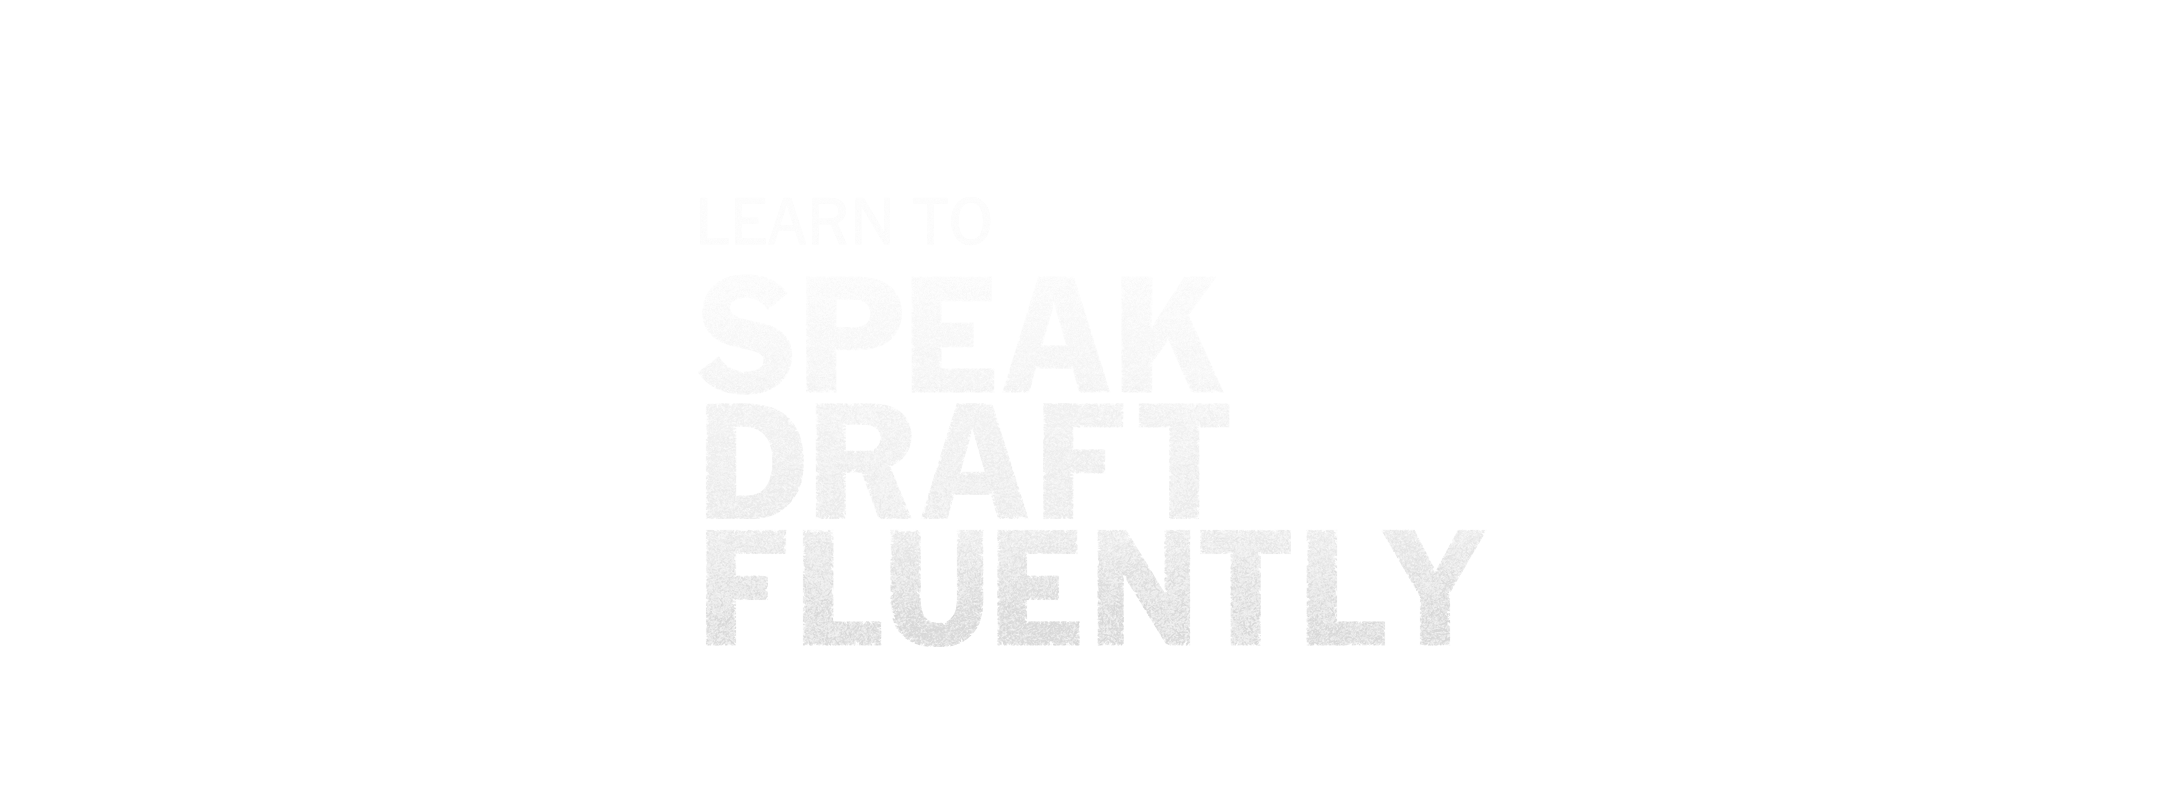 Learn to speak draft fluently